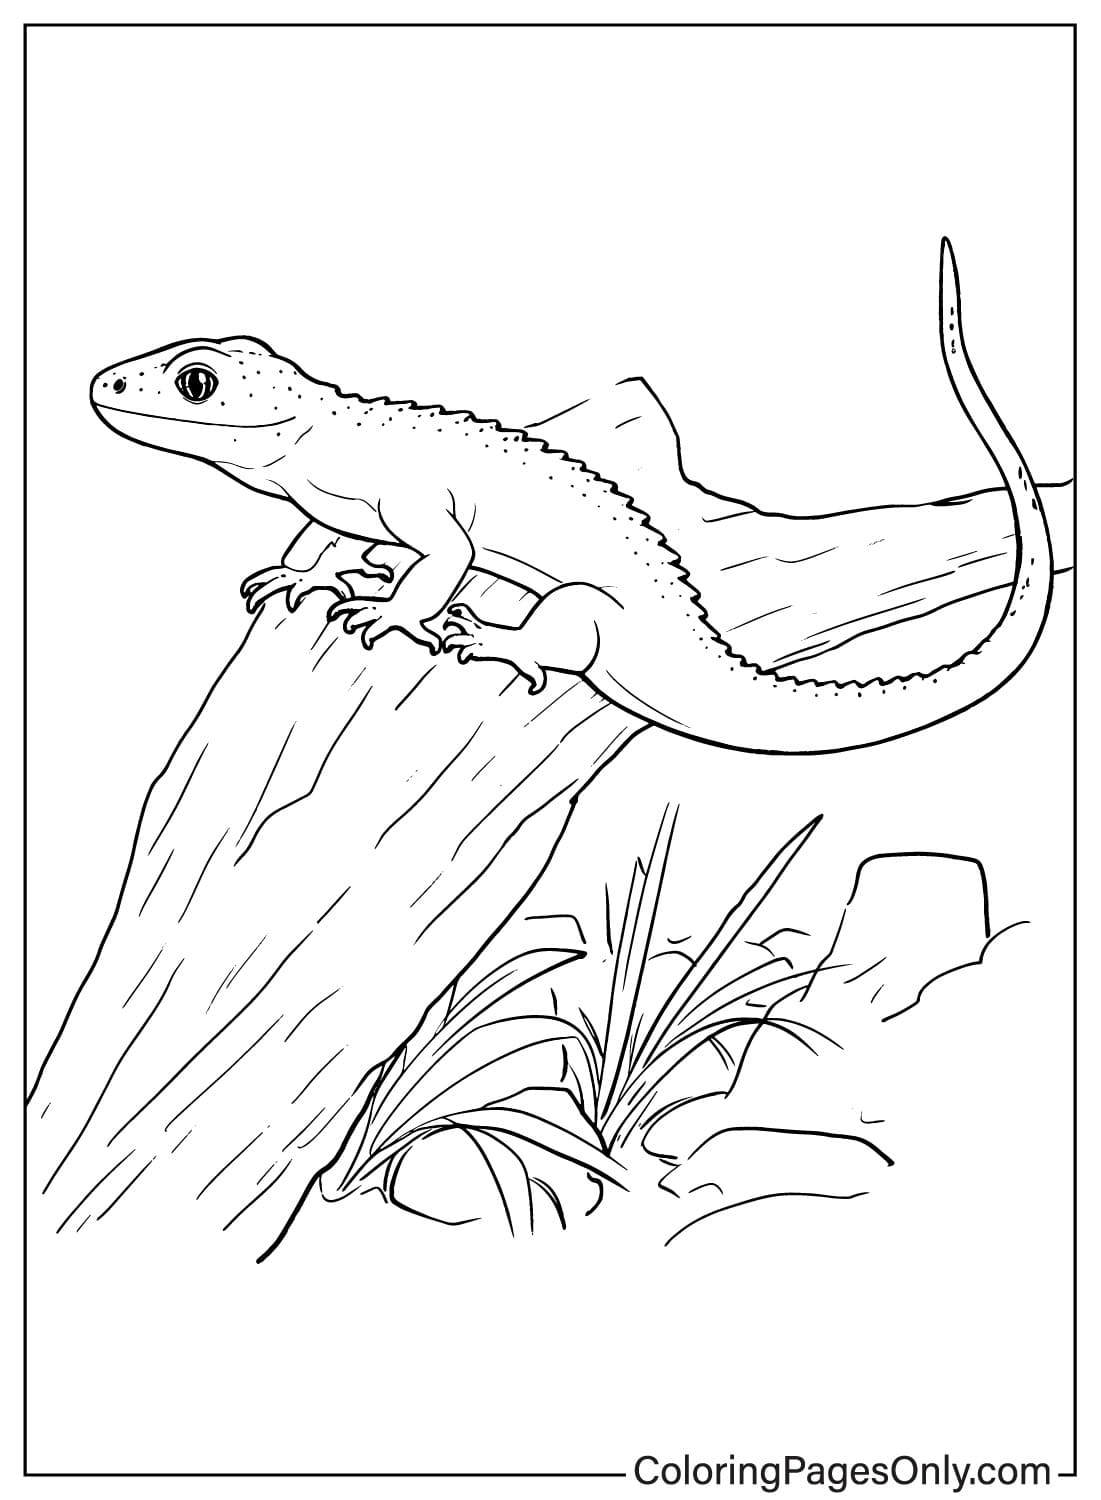 Página para colorir de lagarto para impressão gratuita